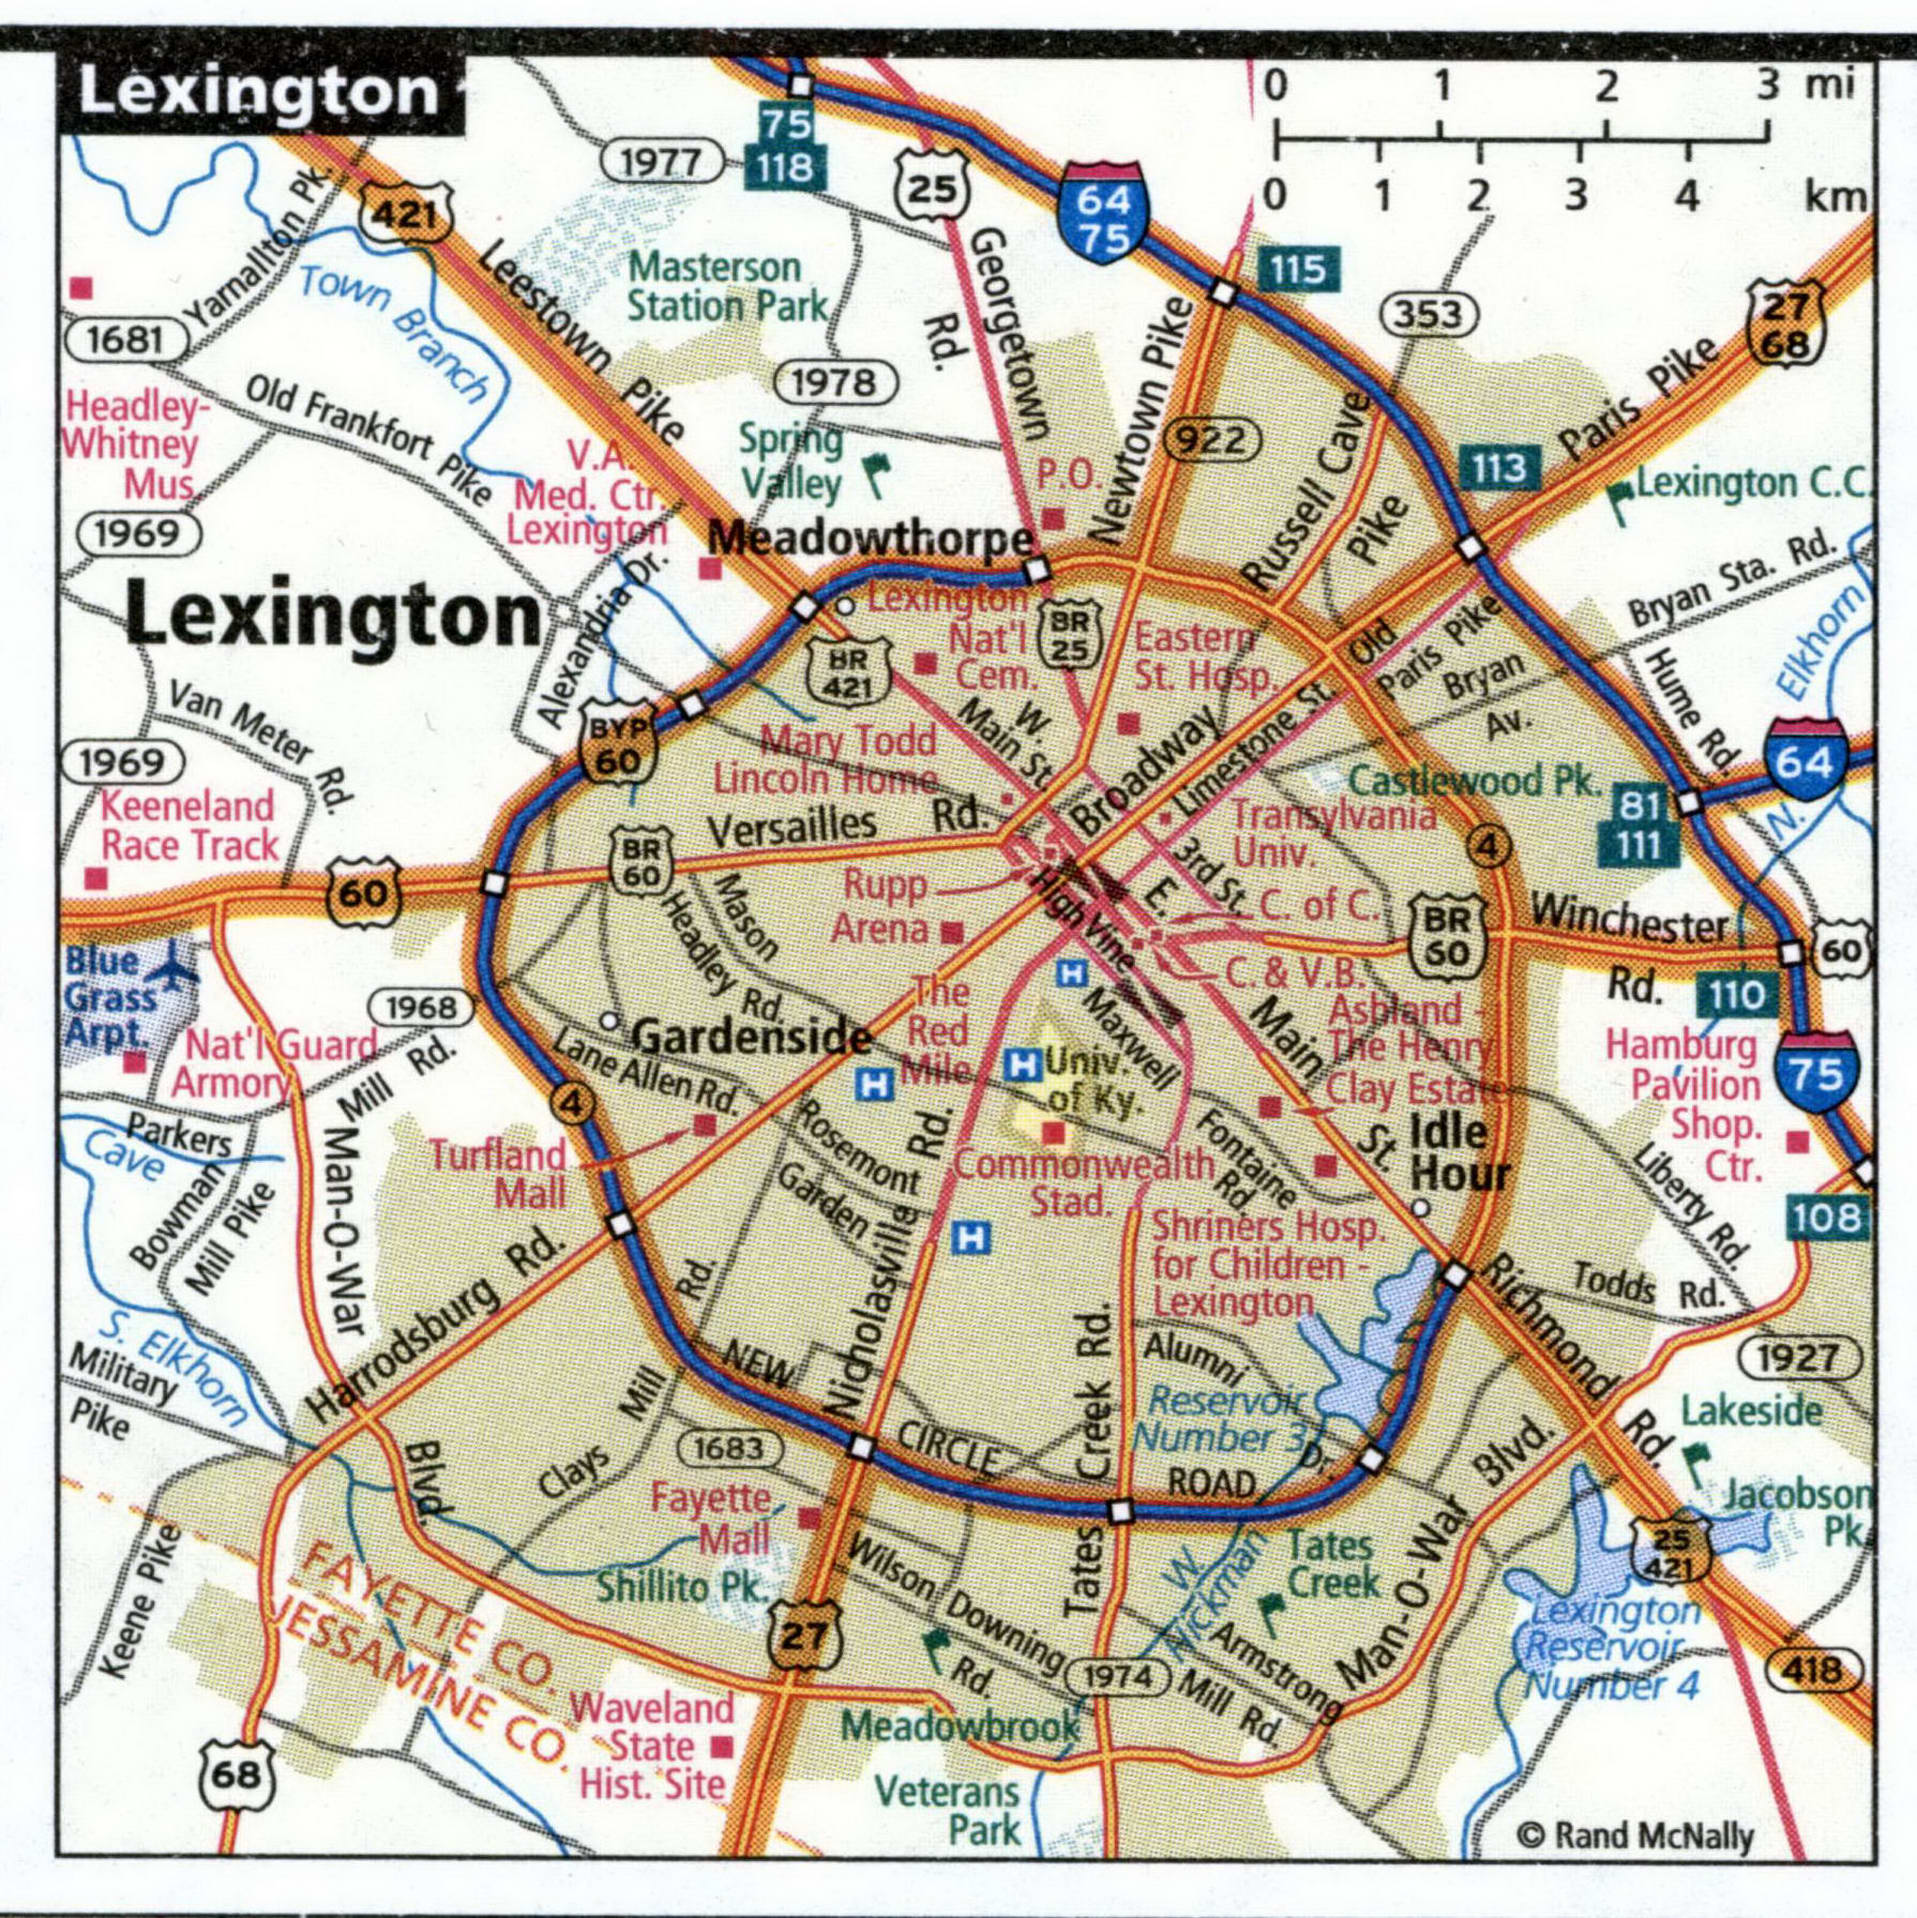 Lexington map for truckers